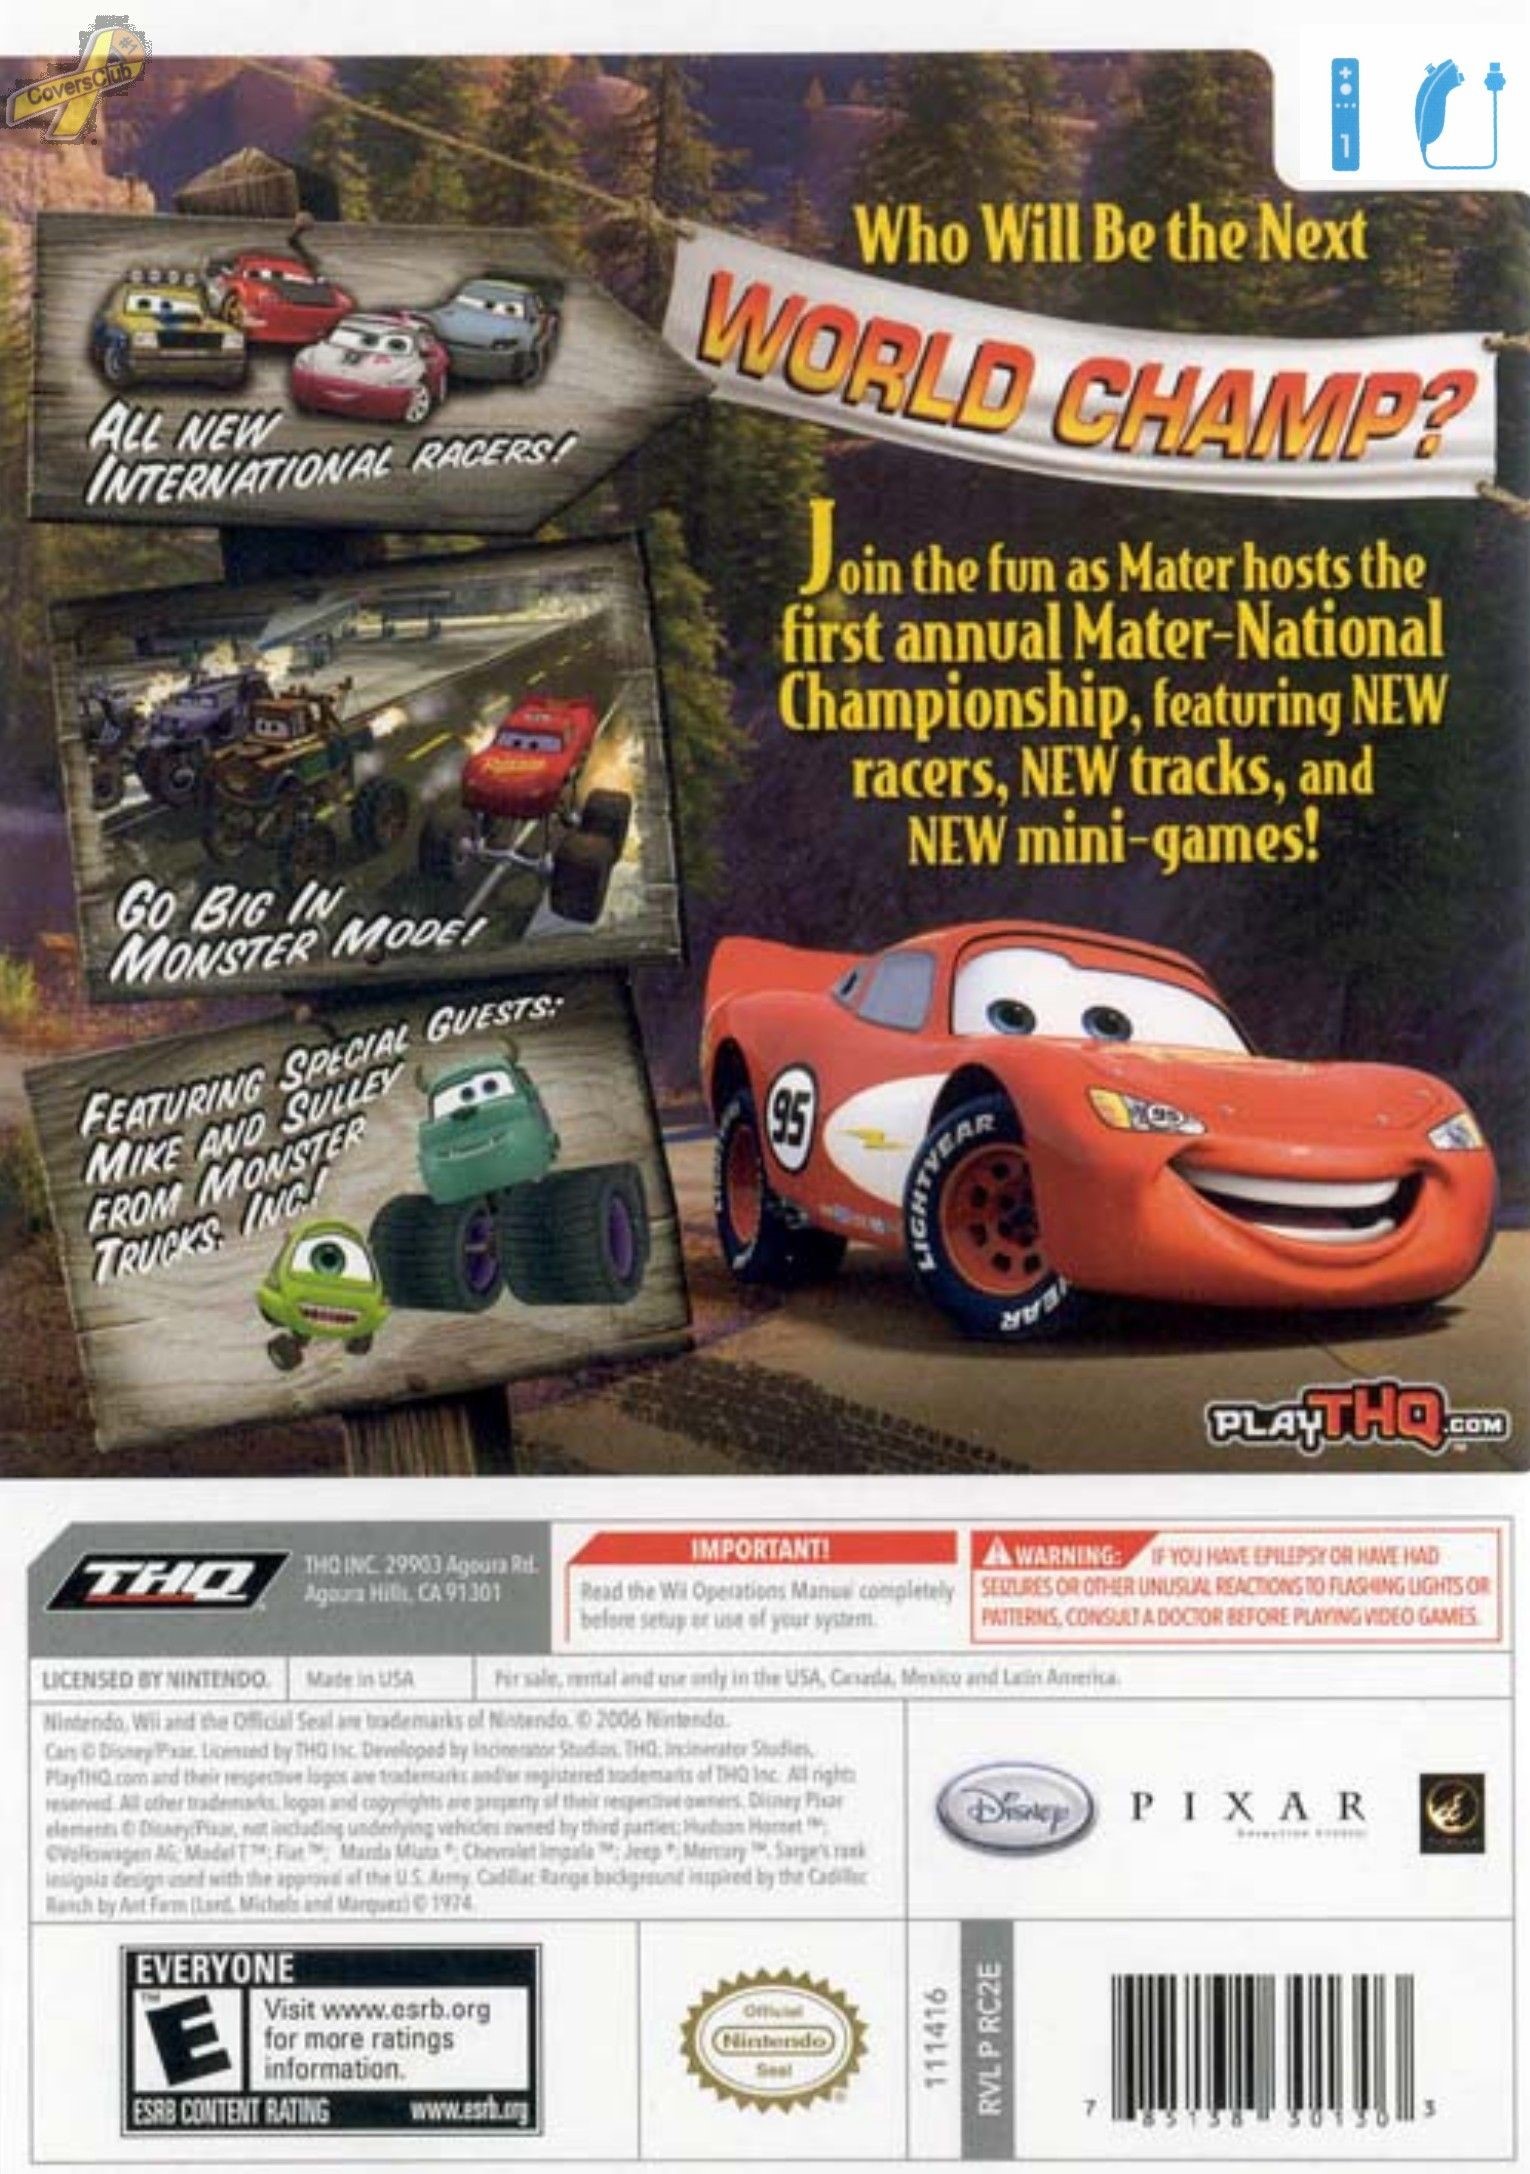 Disney/Pixar Cars Mater-National Championship Box Shot for Wii - GameFAQs